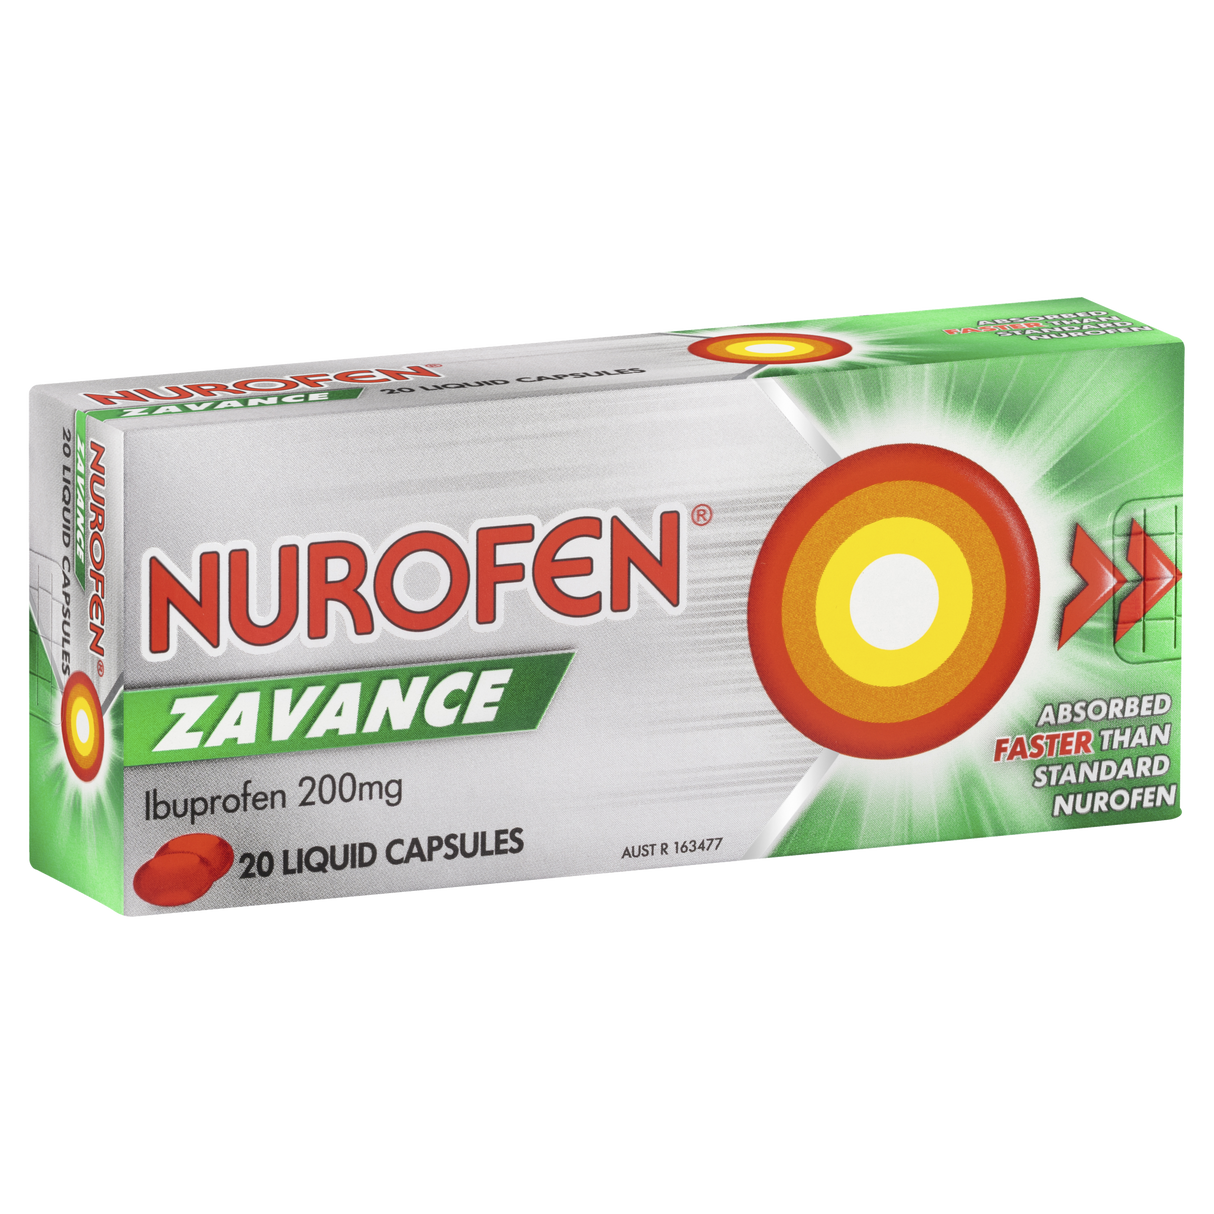 Nurofen Zavance Ibuprofen 200mg Liquid Capsules 20 Pack